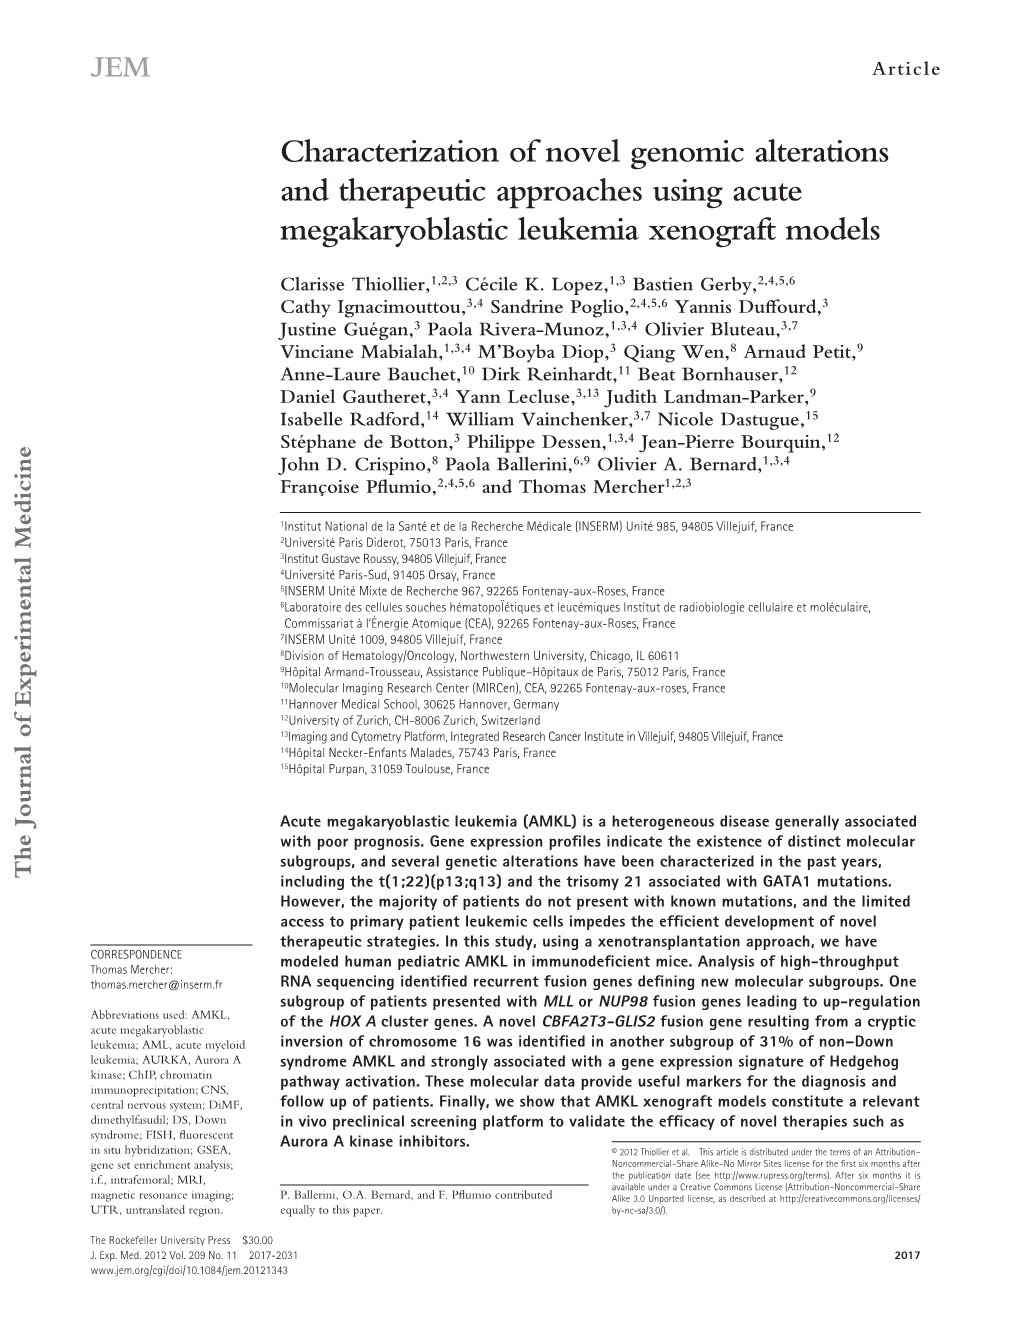 Characterization of Novel Genomic Alterations and Therapeutic Approaches Using Acute Megakaryoblastic Leukemia Xenograft Models